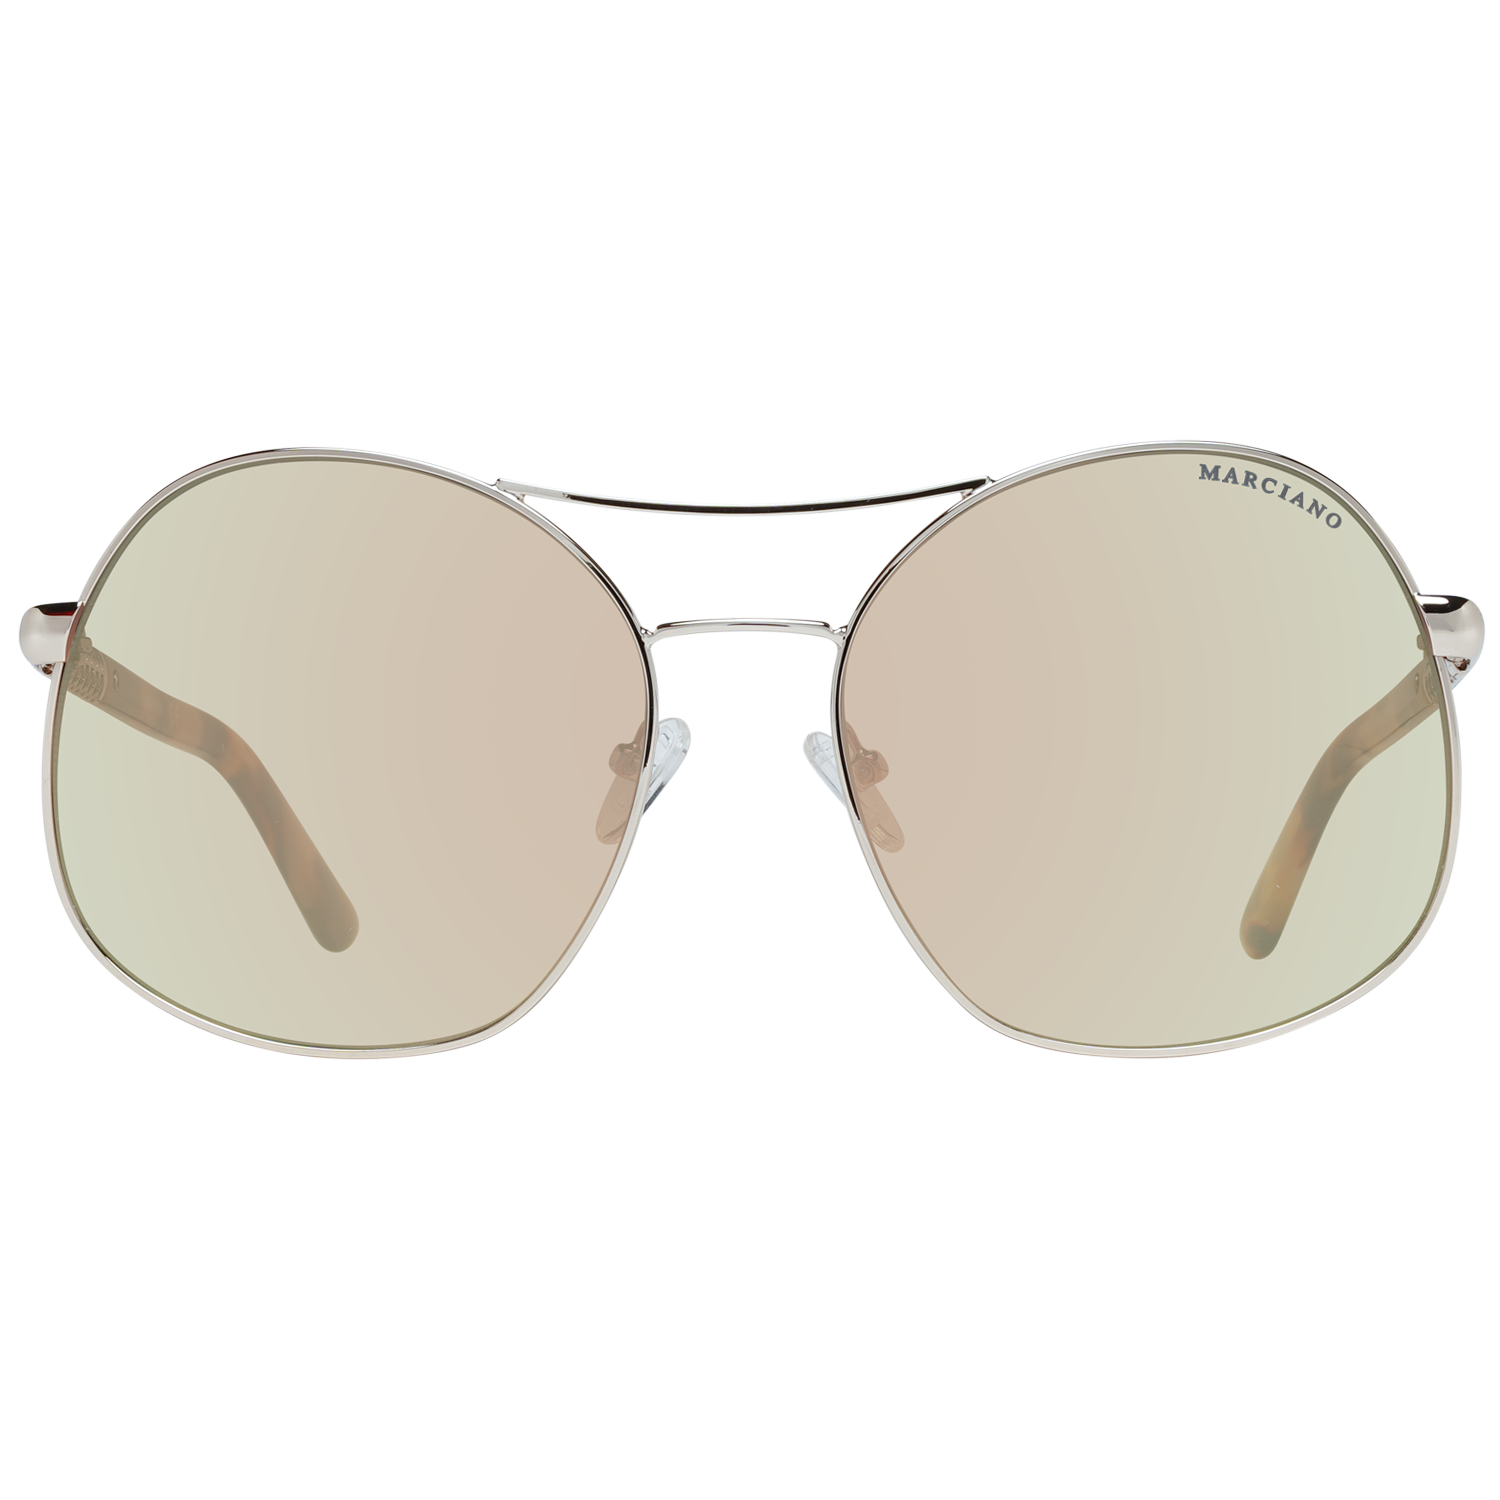 Marciano by Guess Sunglasses Marciano by Guess Sunglasses GM0807 32B 62 Eyeglasses Eyewear UK USA Australia 